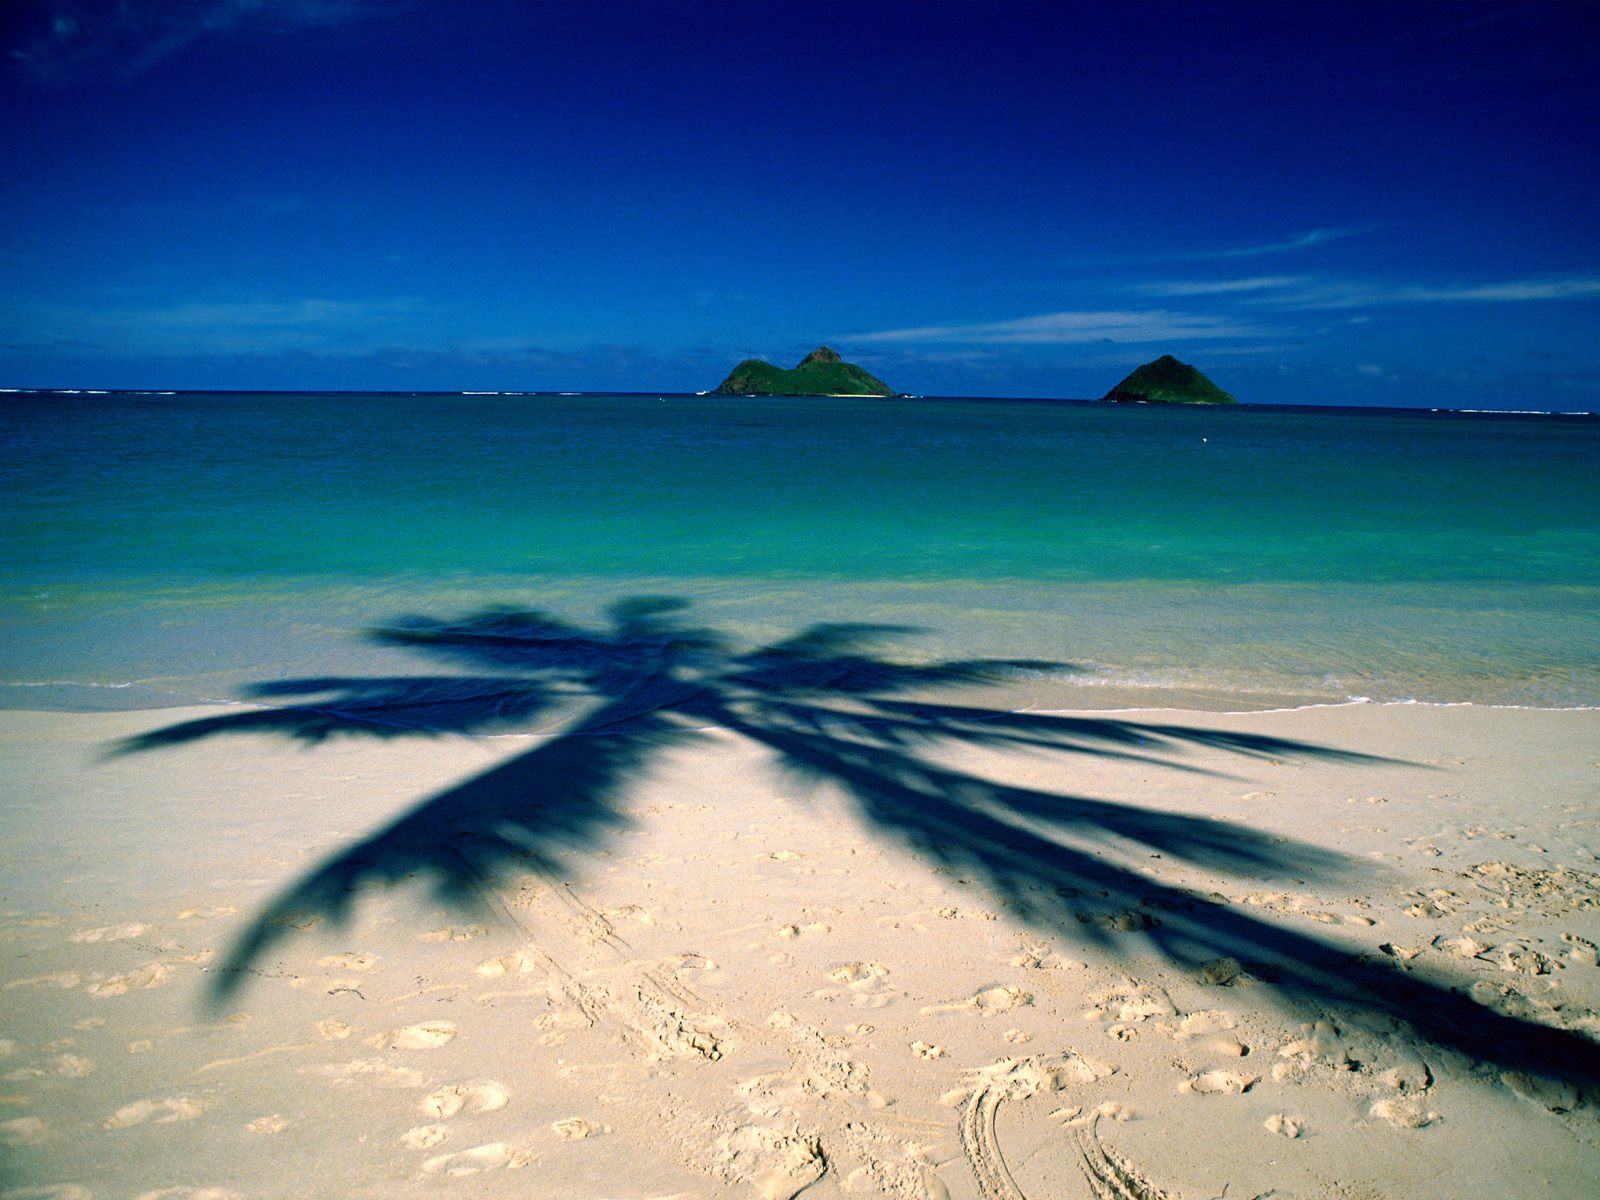  Hawaii 1600x1200 ID 122   Beaches Rivers Oceans Photography Desktop